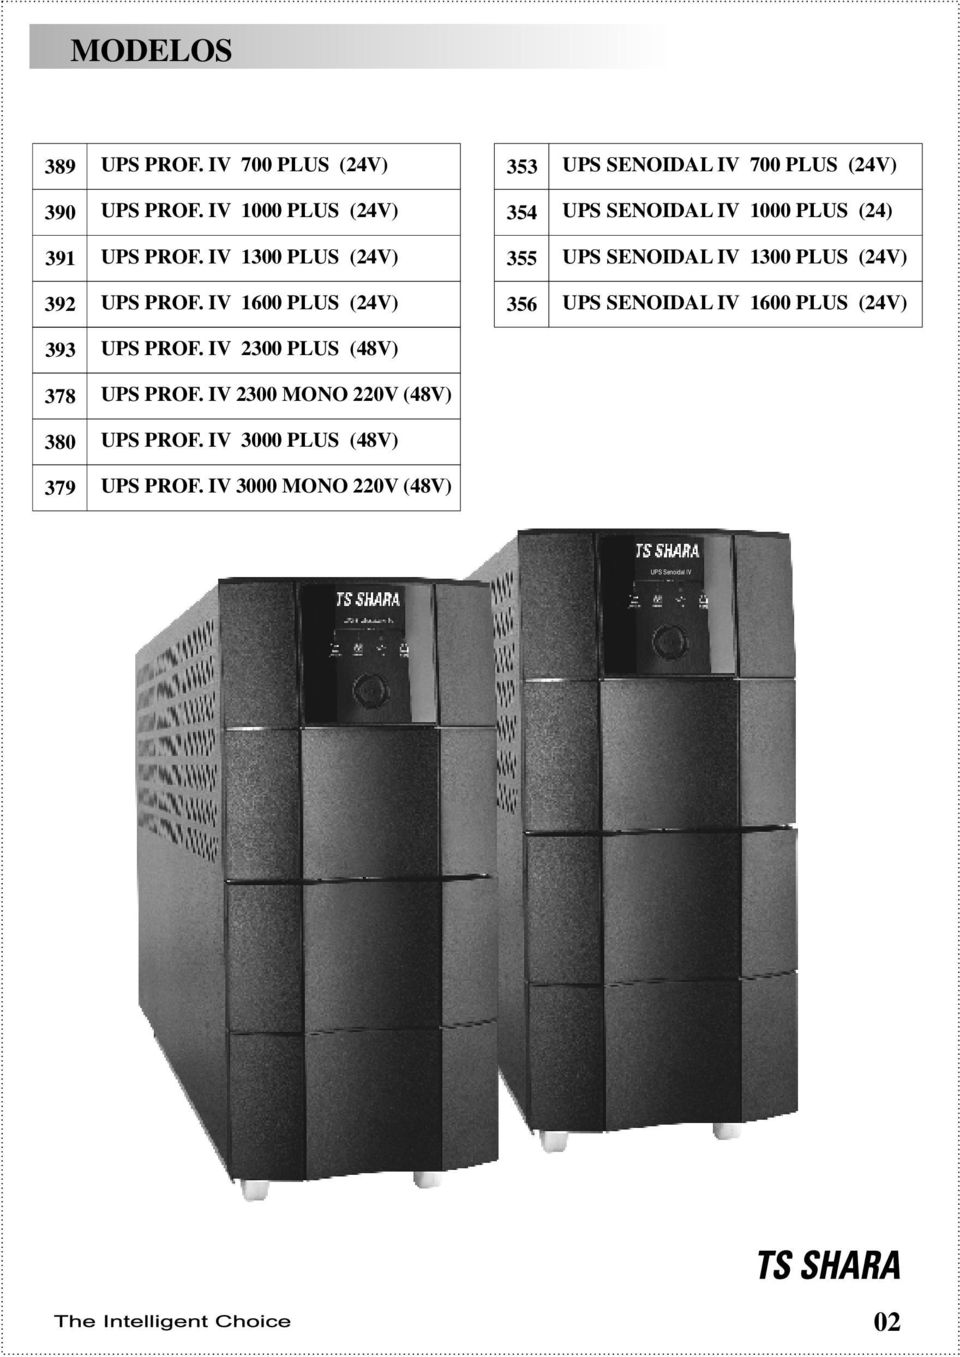 IV 1300 PLUS (24V) 355 UPS SENOIDAL IV 1300 PLUS (24V) 392 UPS PROF.